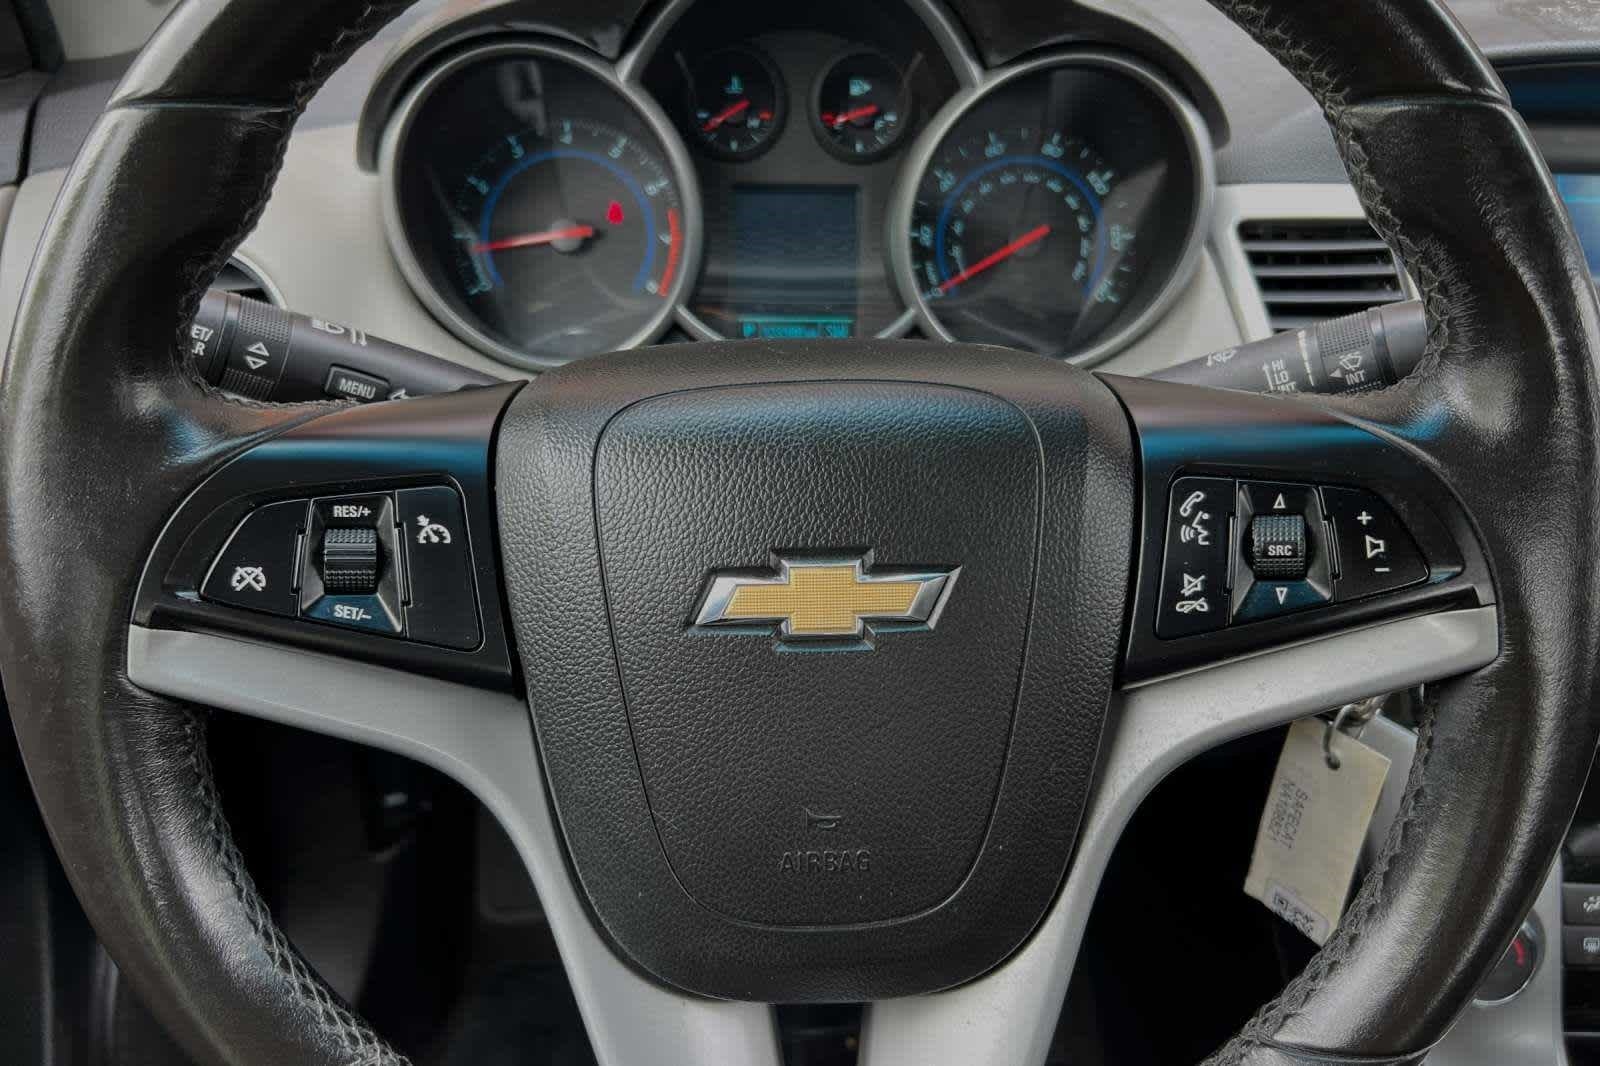 2013 Chevrolet Cruze 1LT